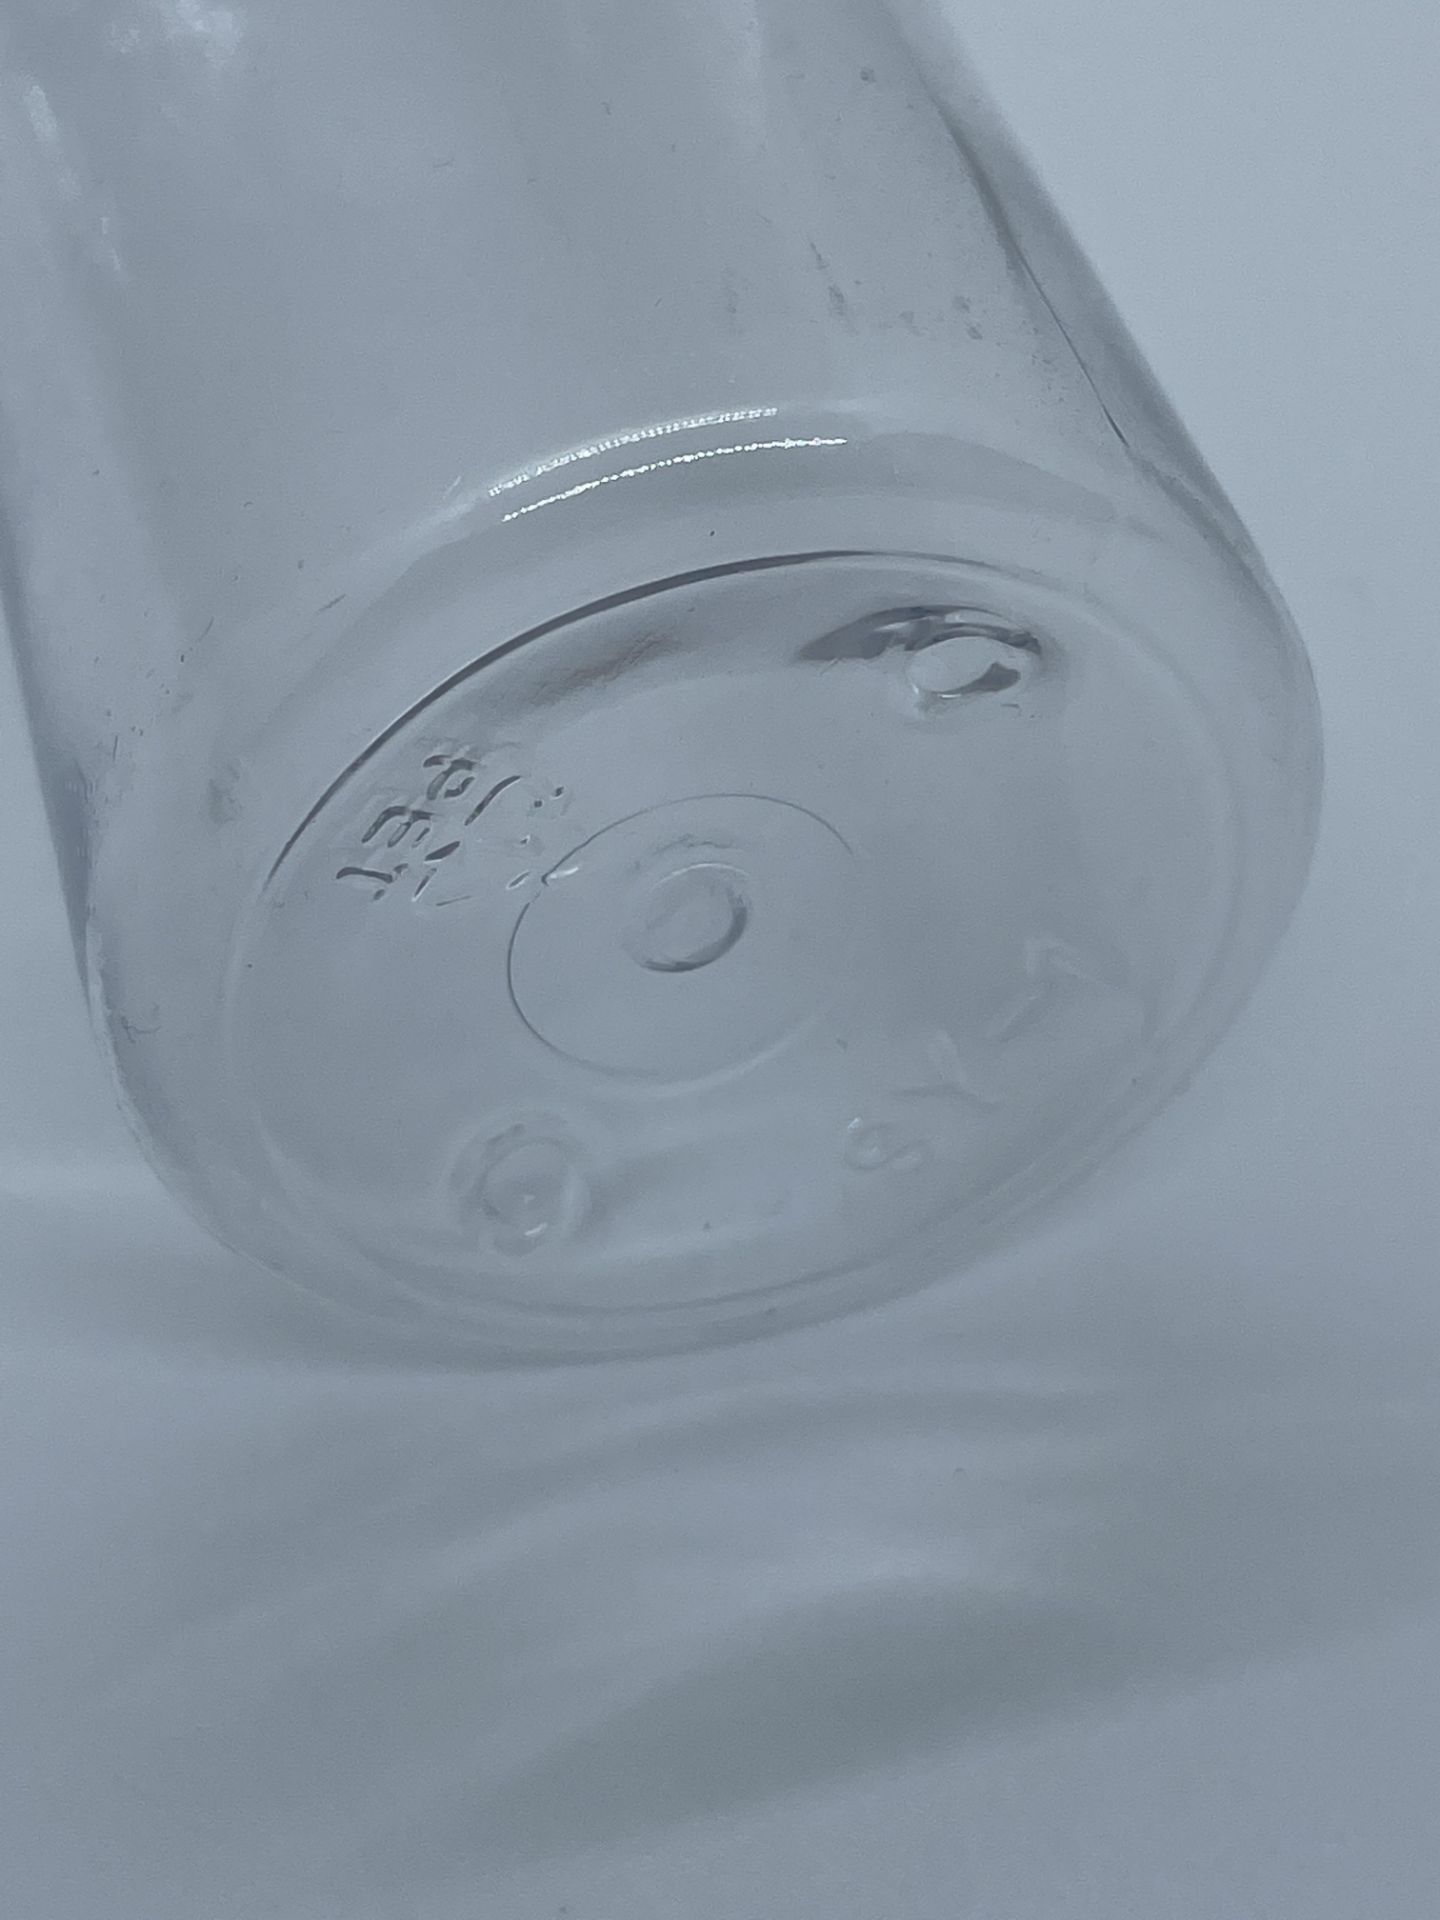 75,000 - Clear Plastic Bullet 8 oz Empty Bottles, 24-410 Threading Neck, 6.25" Tall, 2" Diameter - Image 6 of 10